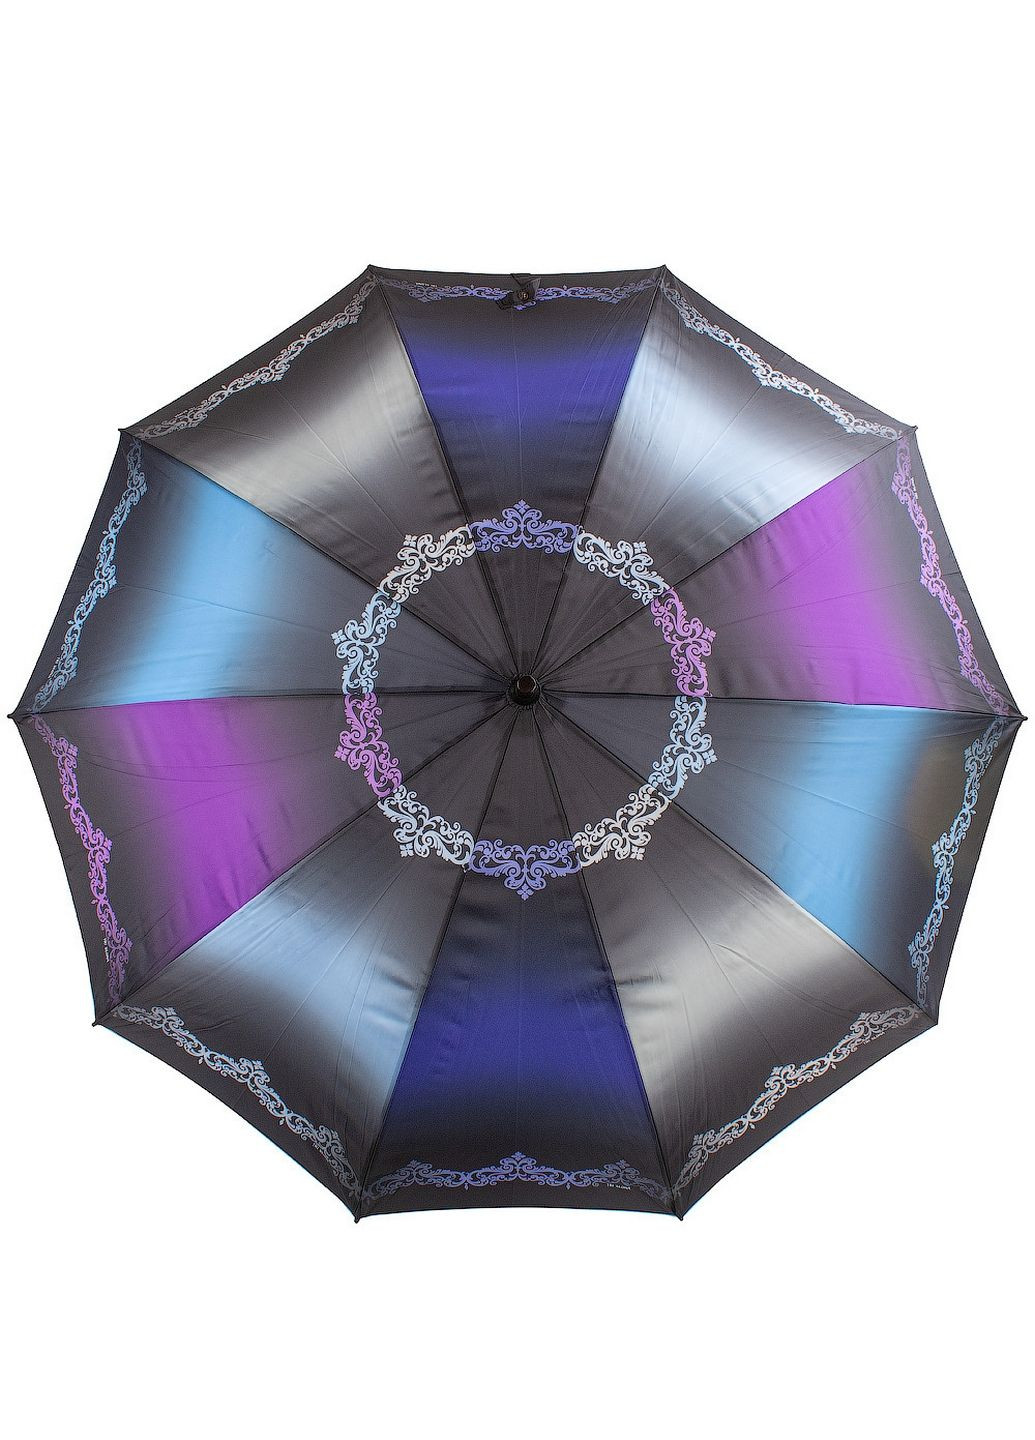 Жіноча парасолька-тростина механічна Три Слона (282587750)